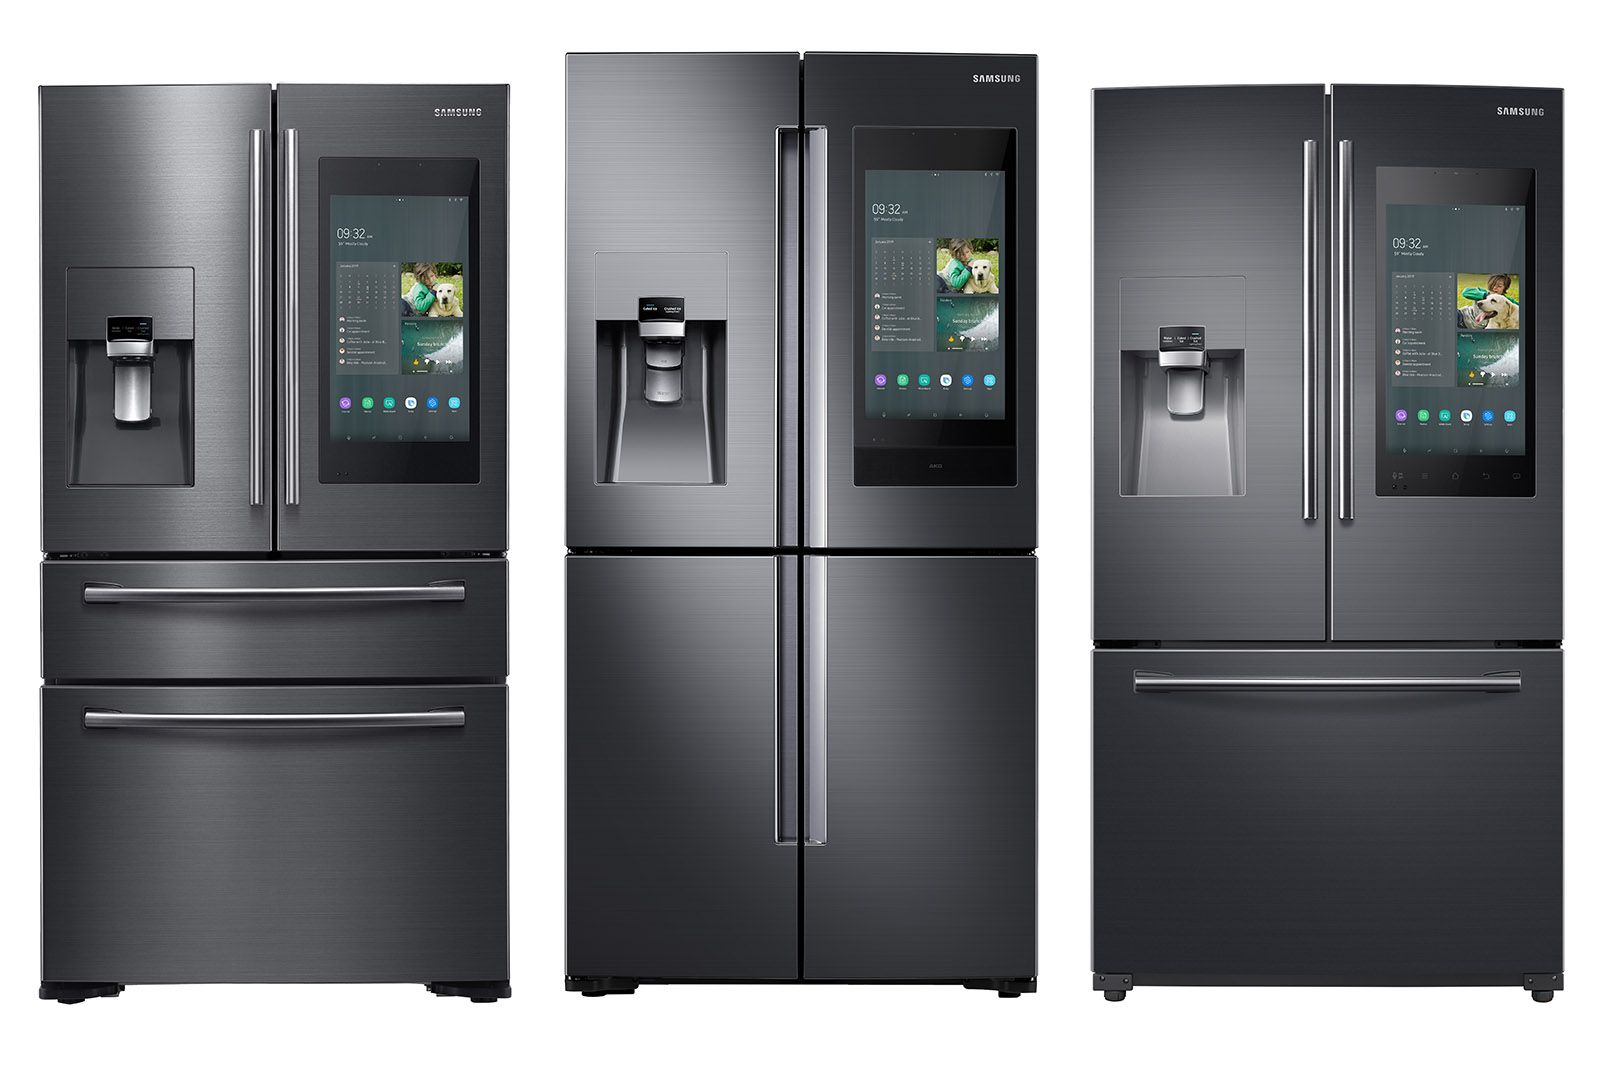 Samsung Family Hub refrigerators get extra smarts for 2019 image 1